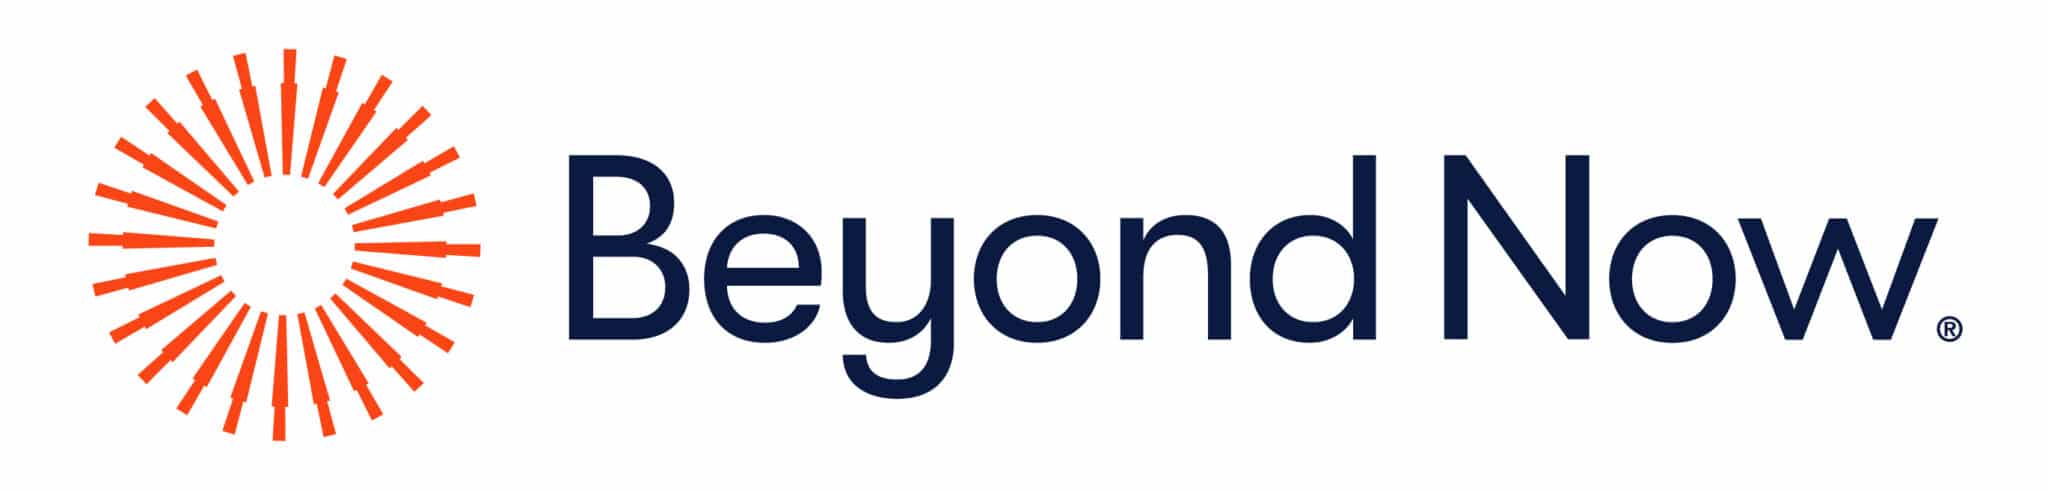 Beyond Now logo